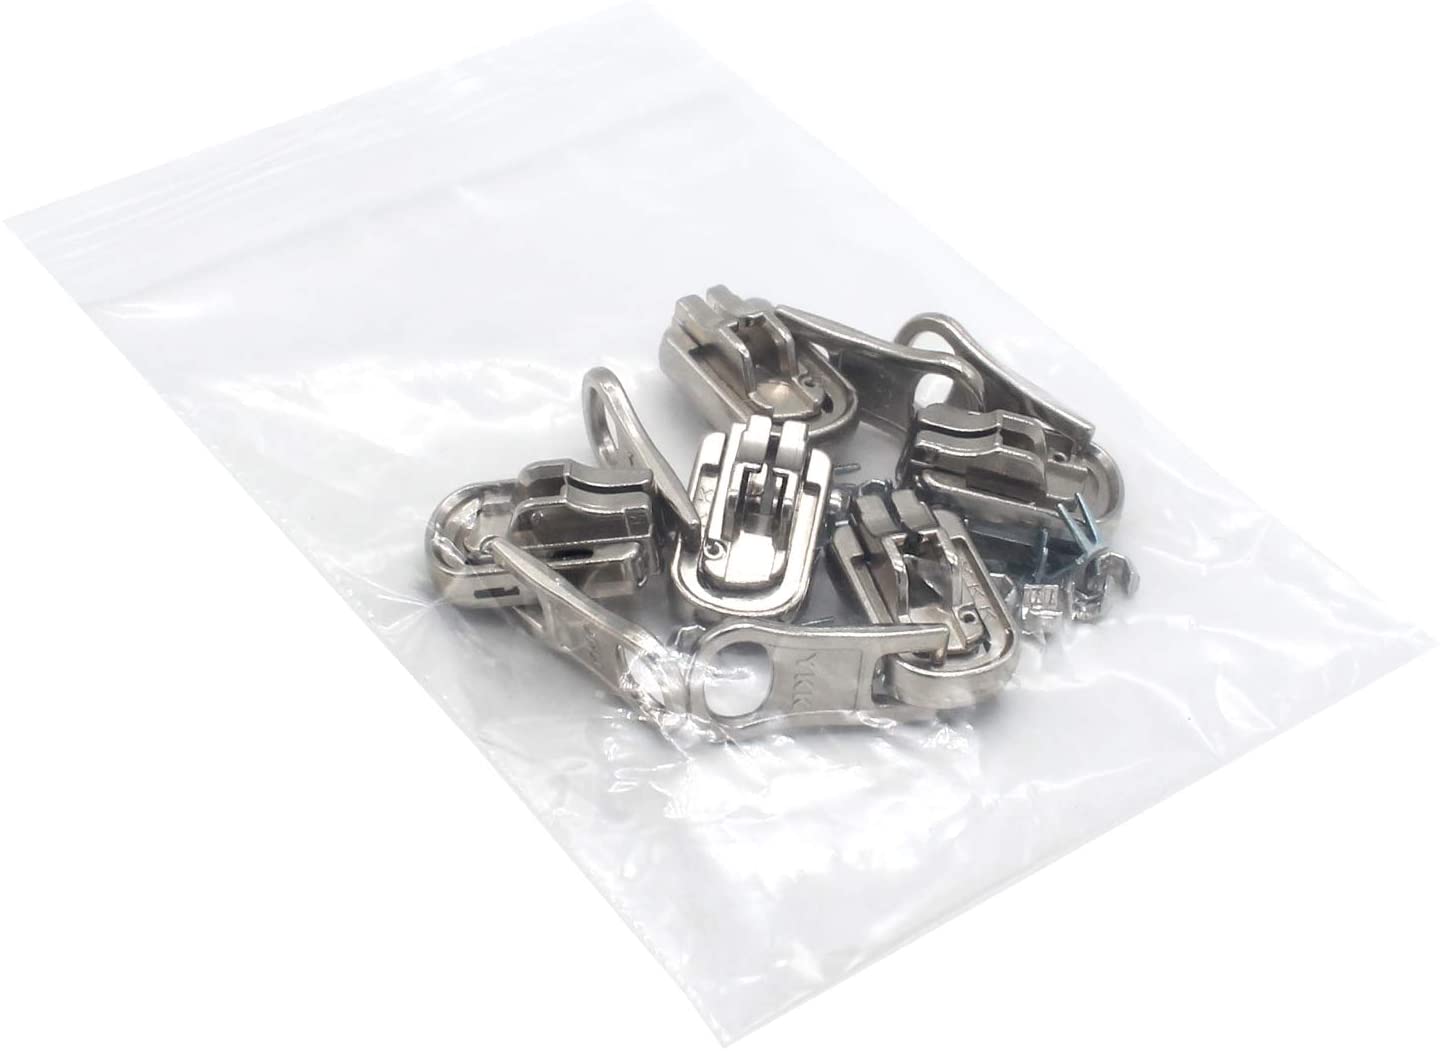 Plating Reversible Auto Lock Zipper Slider Replacement Parts